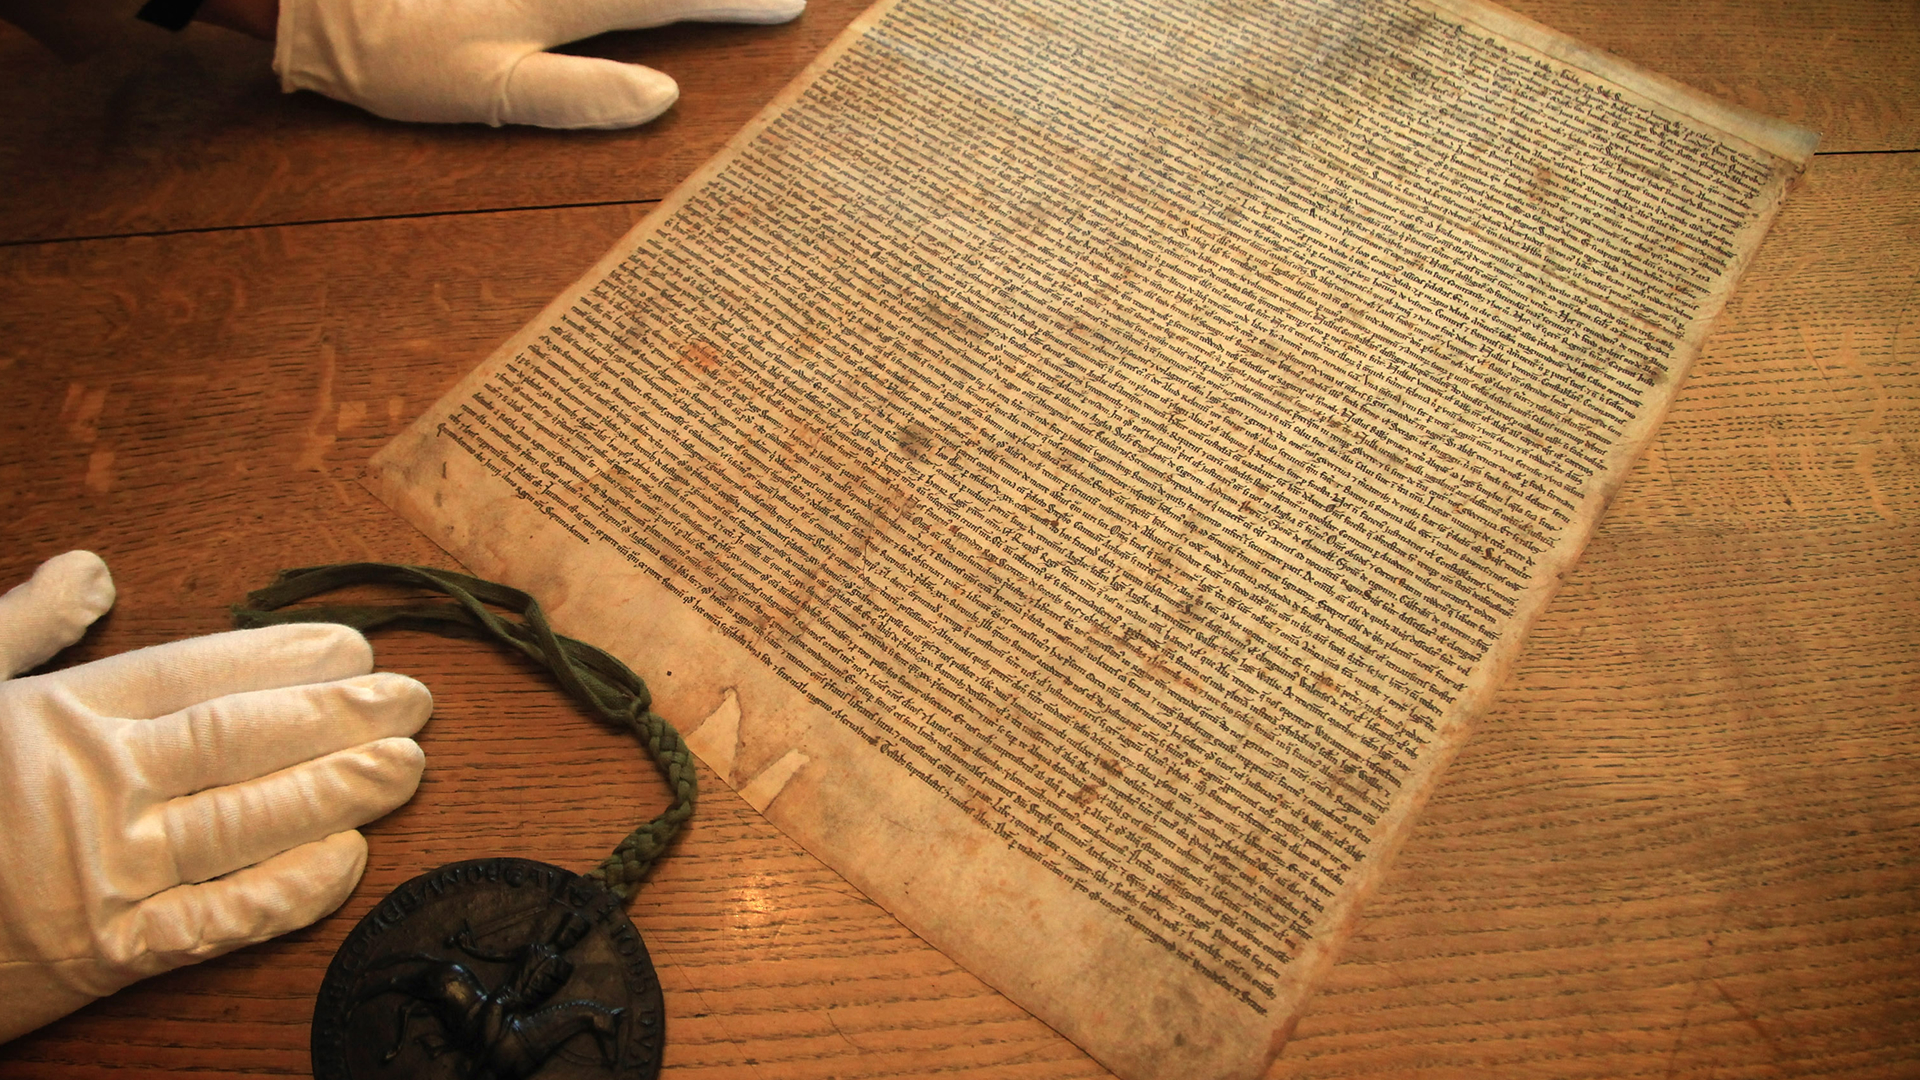 King John puts his seal on Magna Carta, June 15, 1215